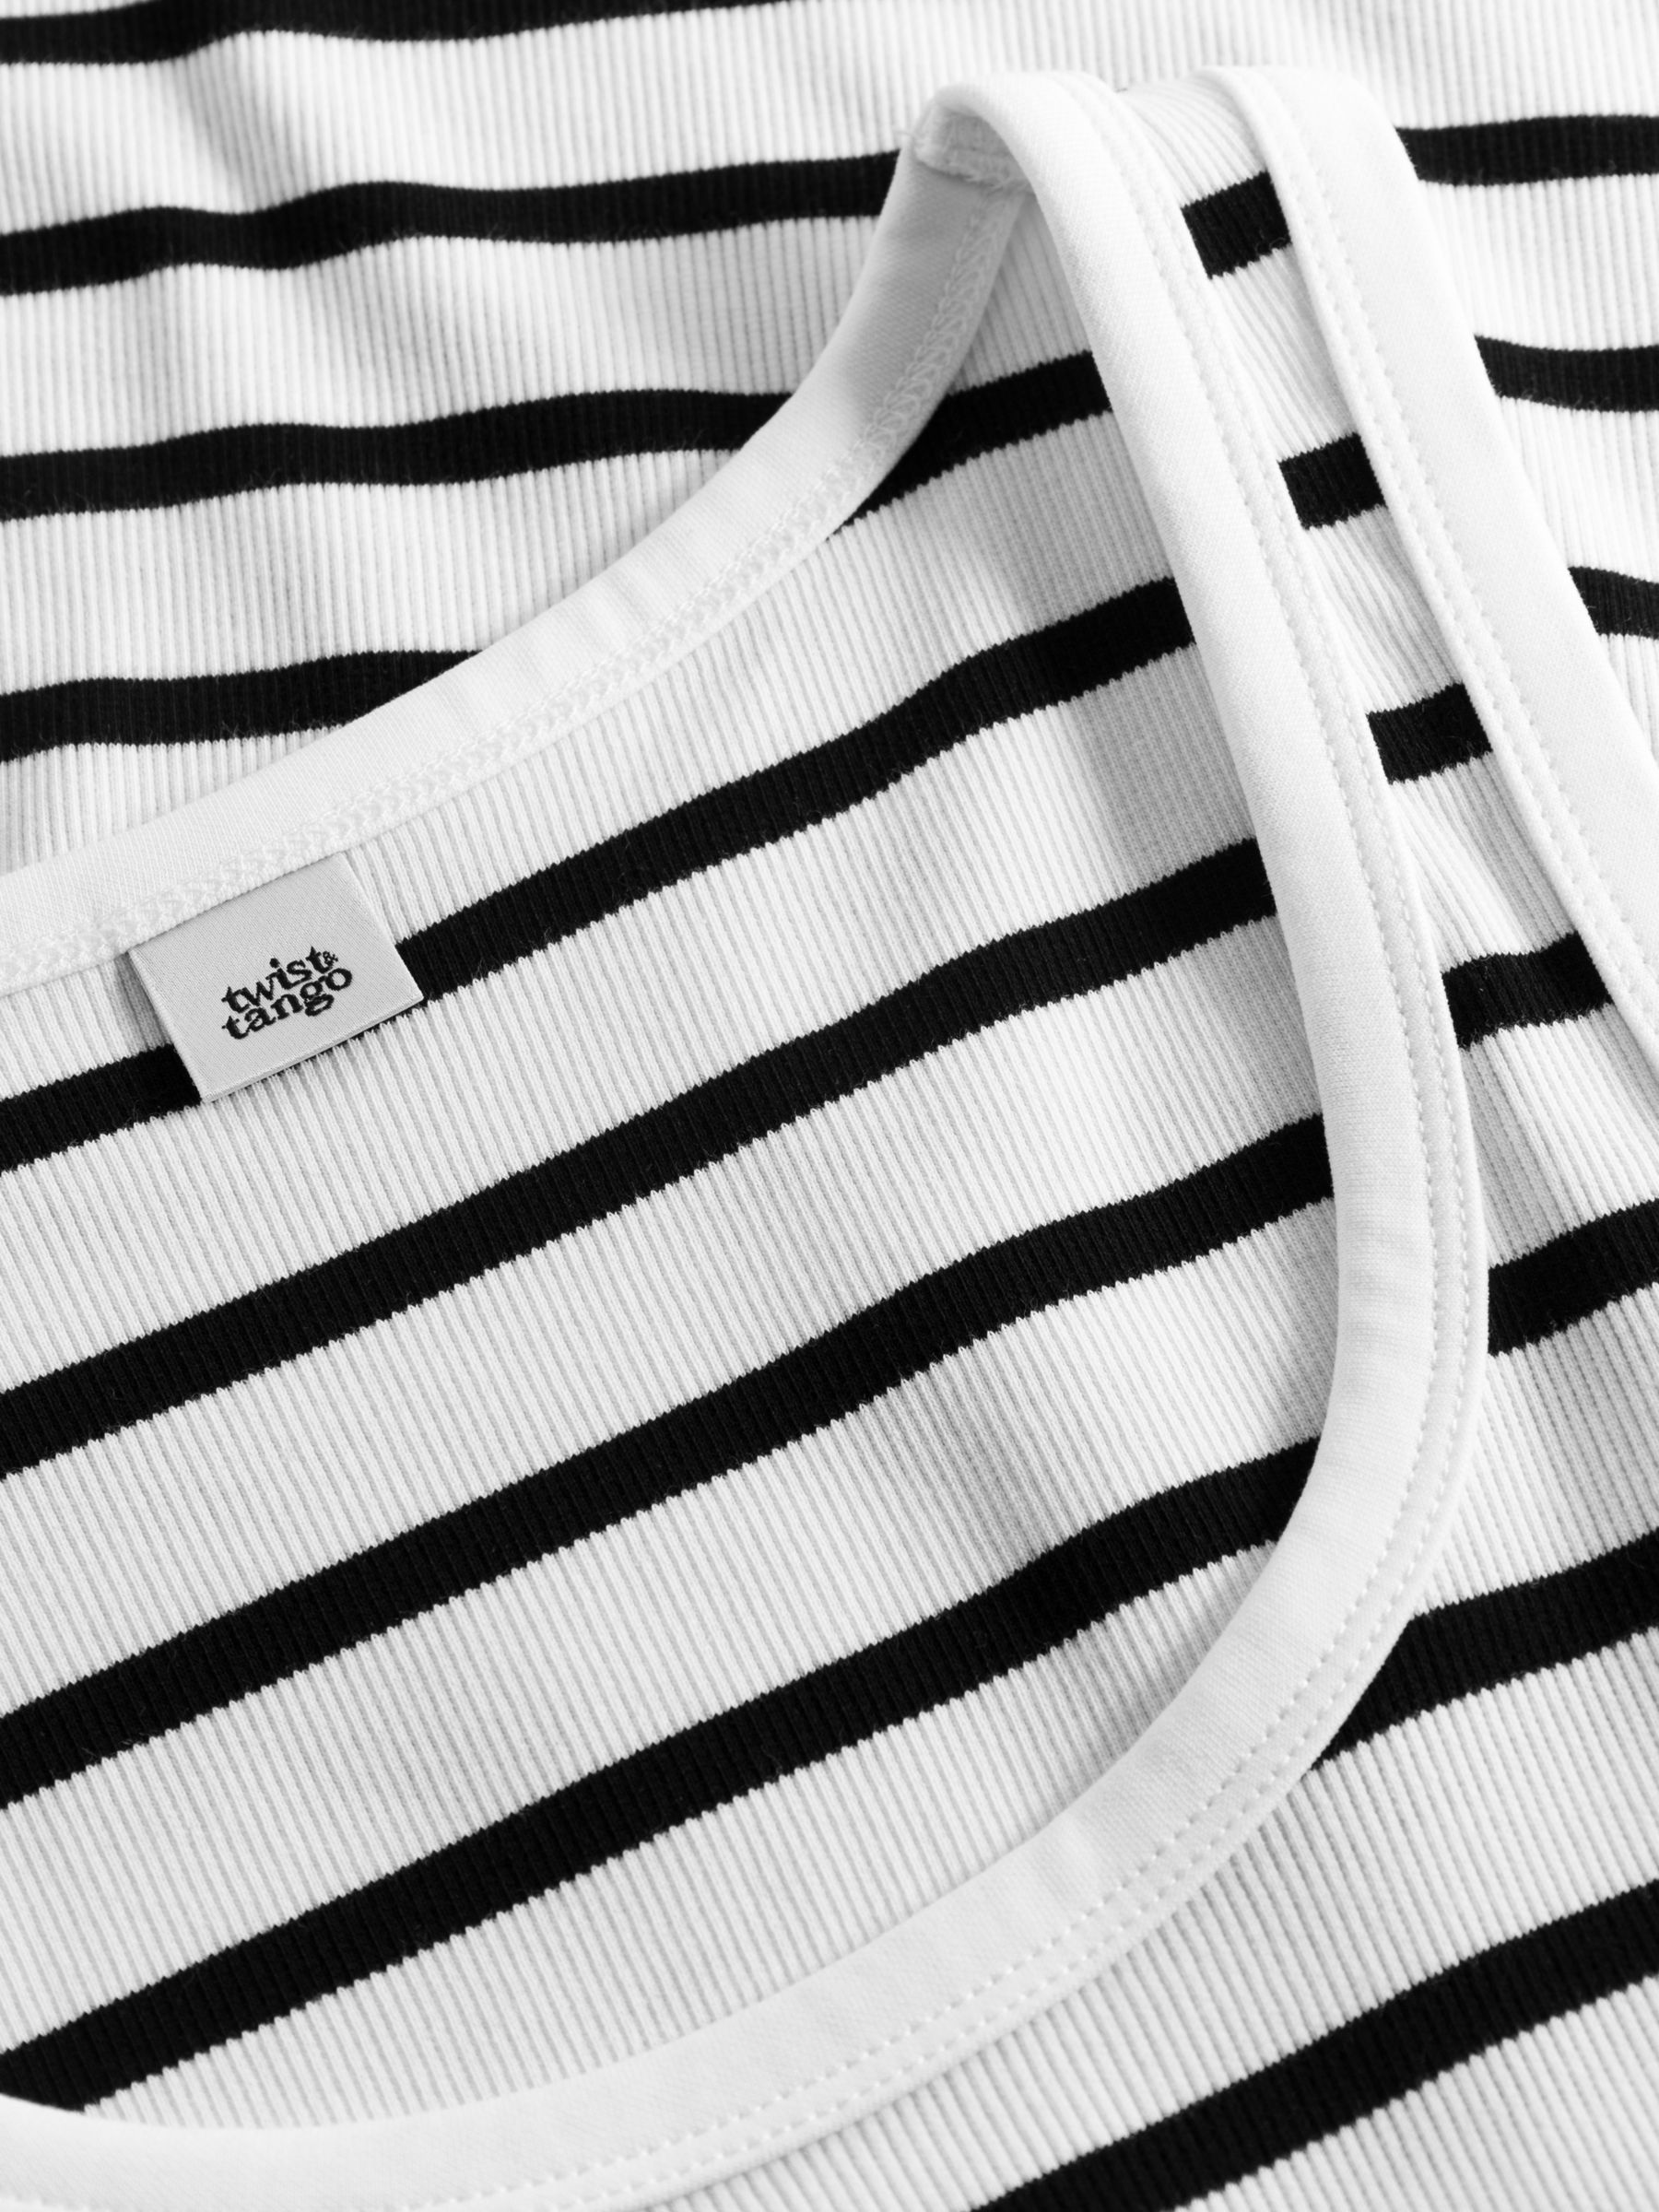 Twist & Tango Violet Striped Scoop Neck Vest Top, Black/White, XS